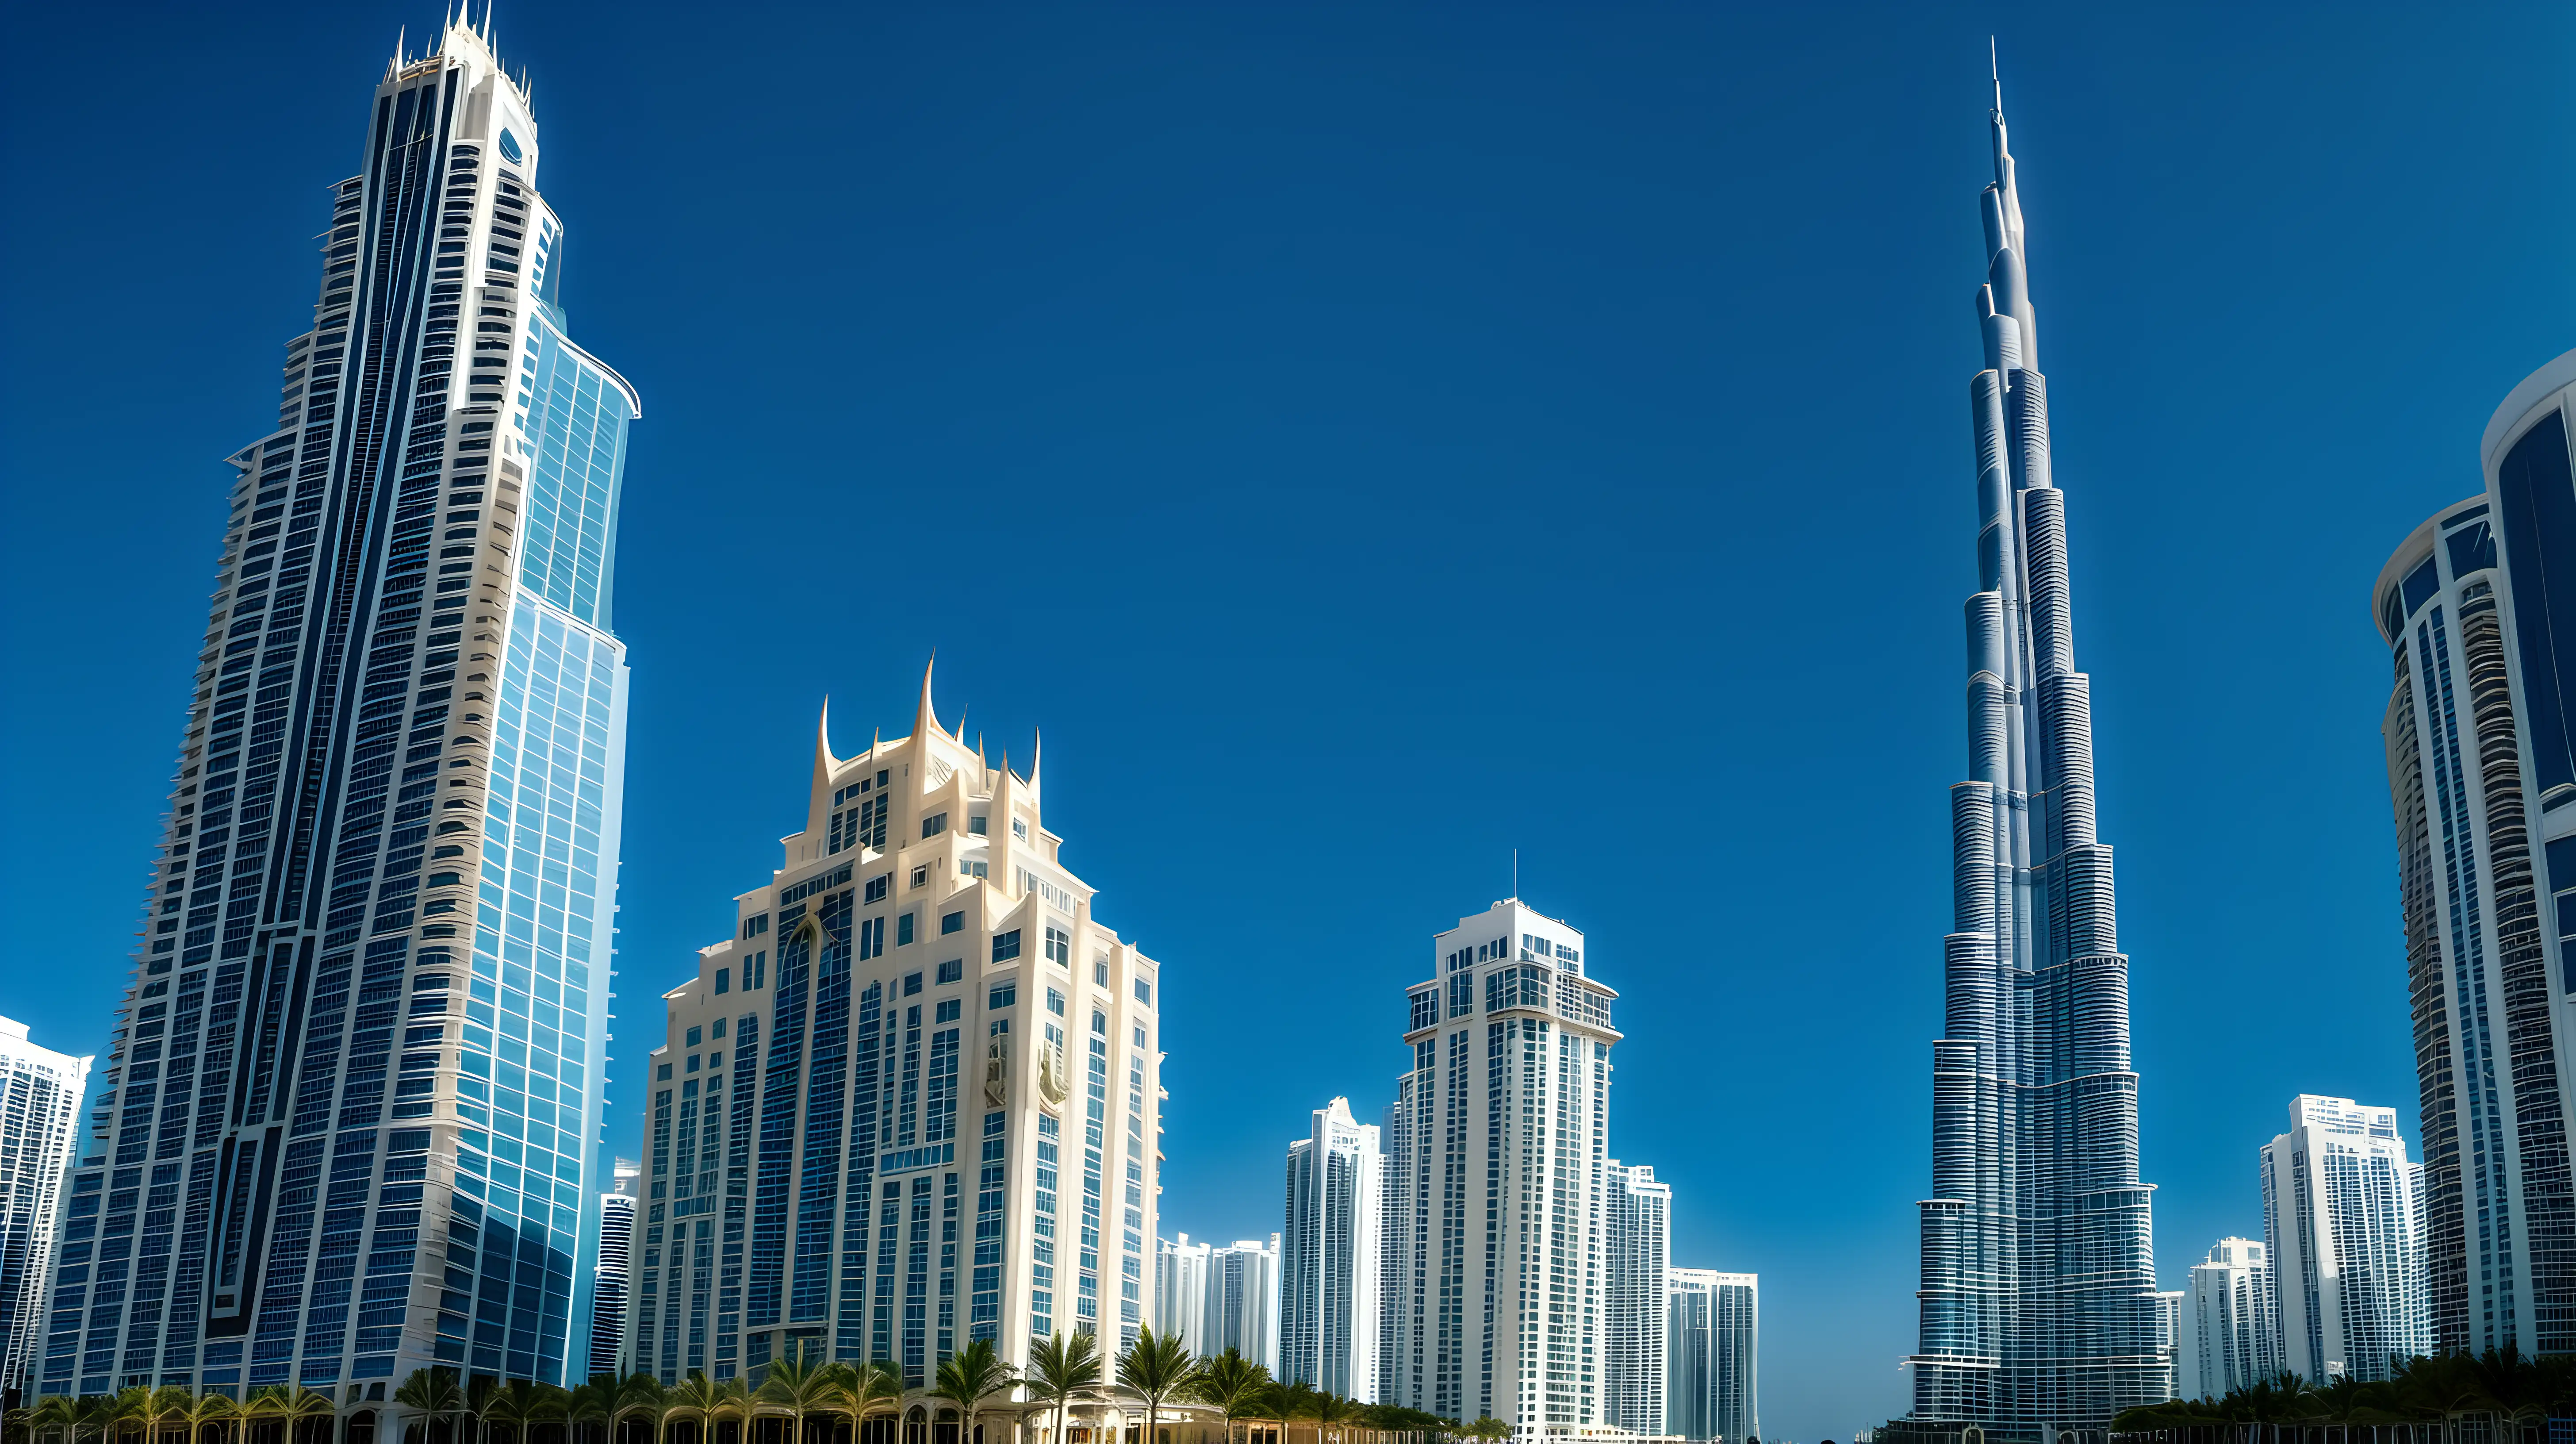 Iconic Skyscrapers Burj Khalifa and Miami Waldorf Astoria Against a Blue Sky